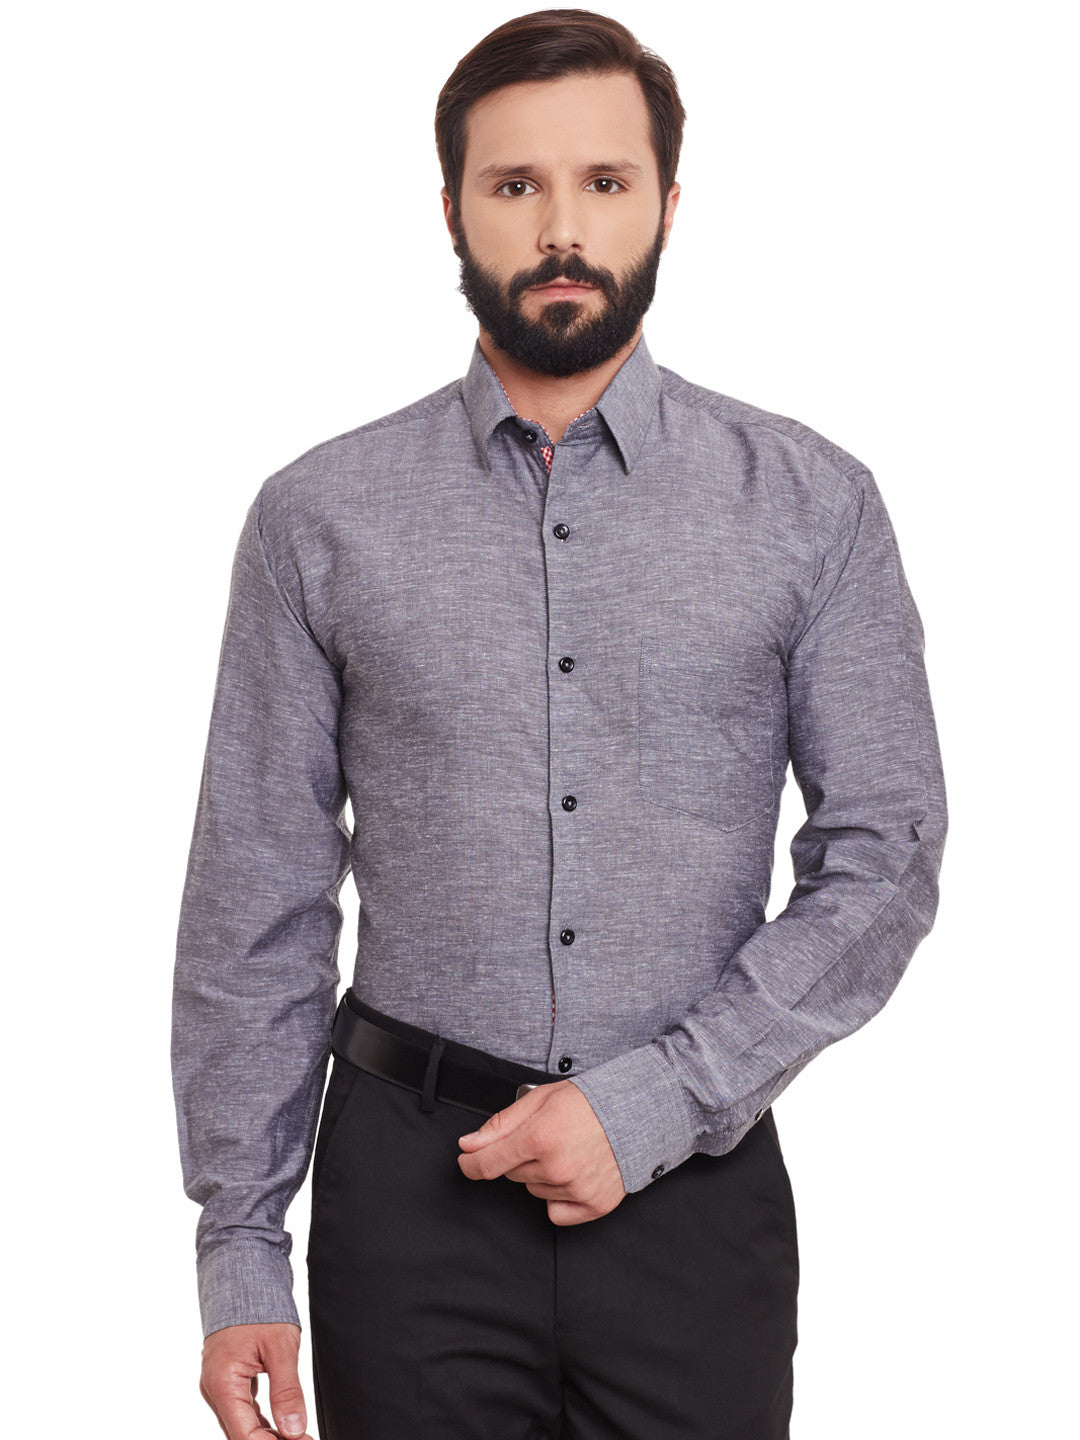 Buy Men Grey Slim Fit Formal Full Sleeves Formal Shirt Online